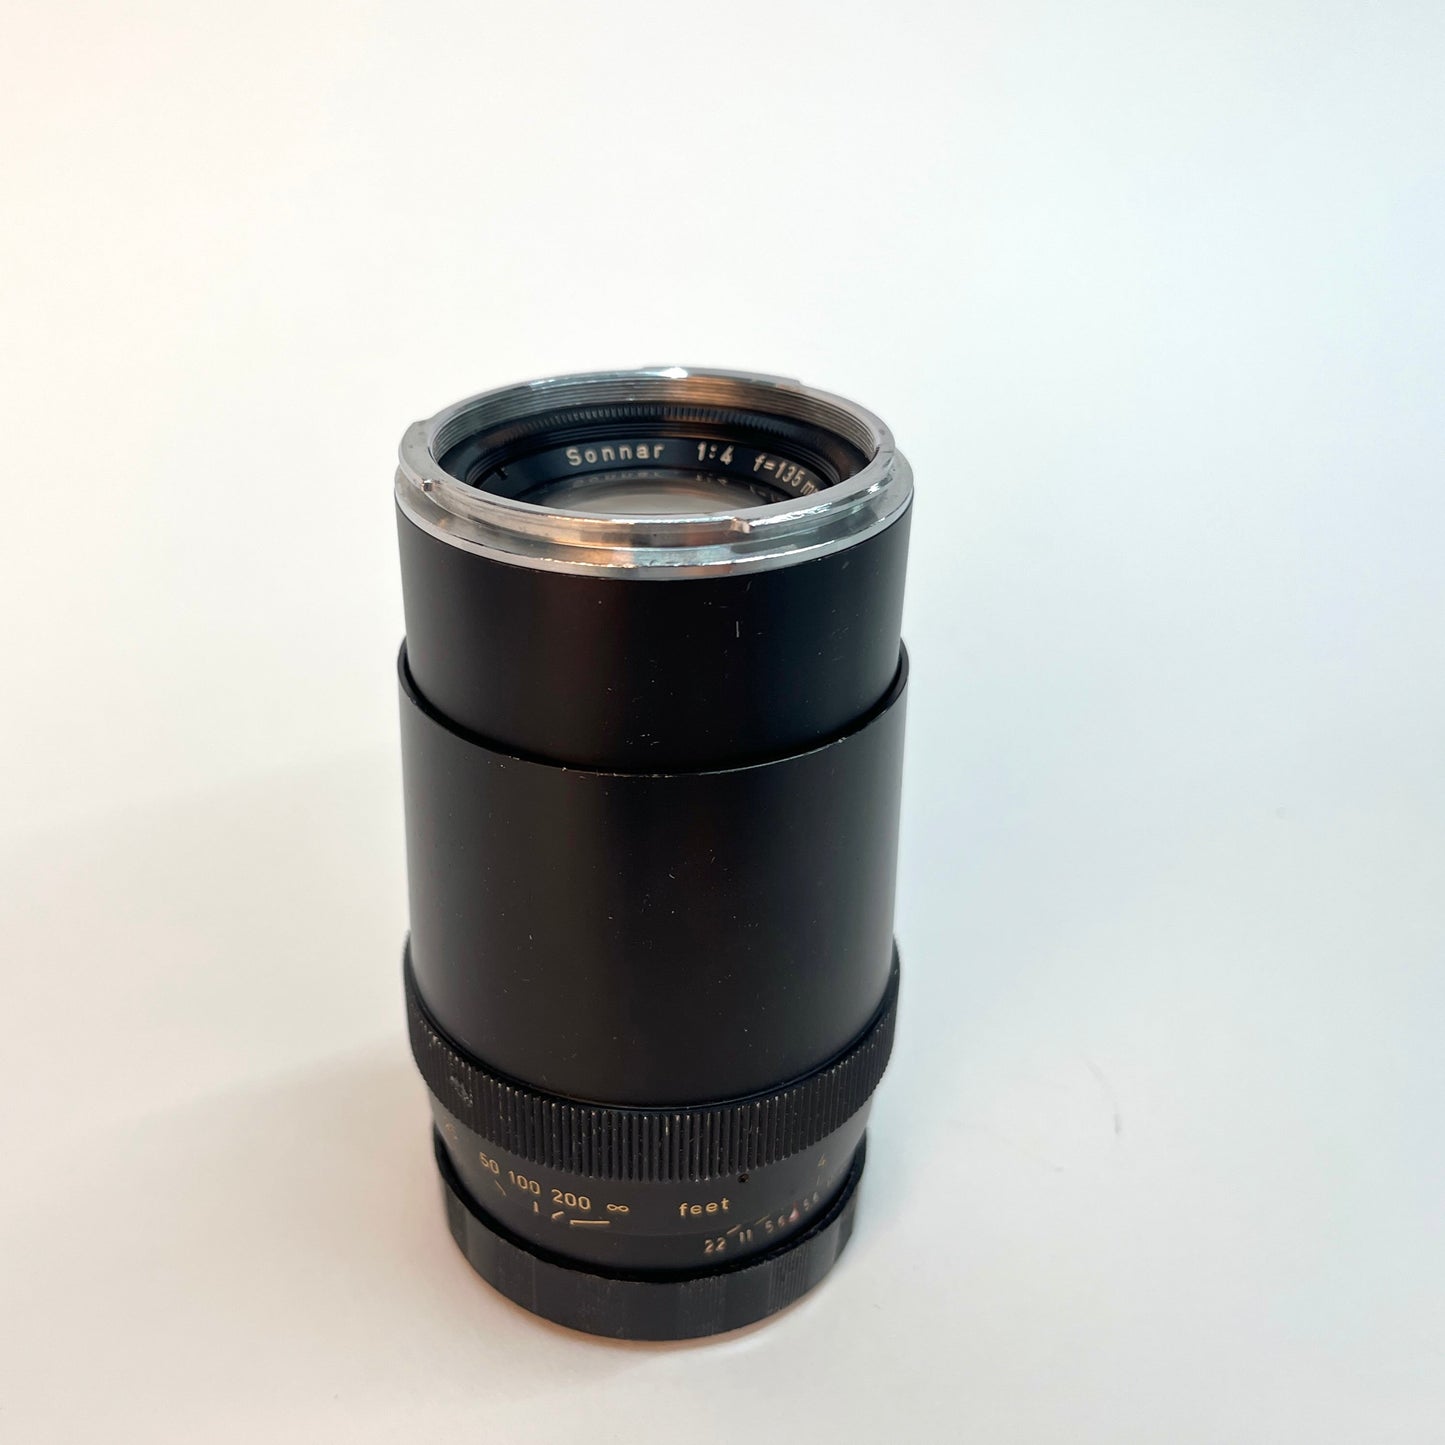 Contarex "All Black" 135mm f/4 Sonnar Lens VERY Rare